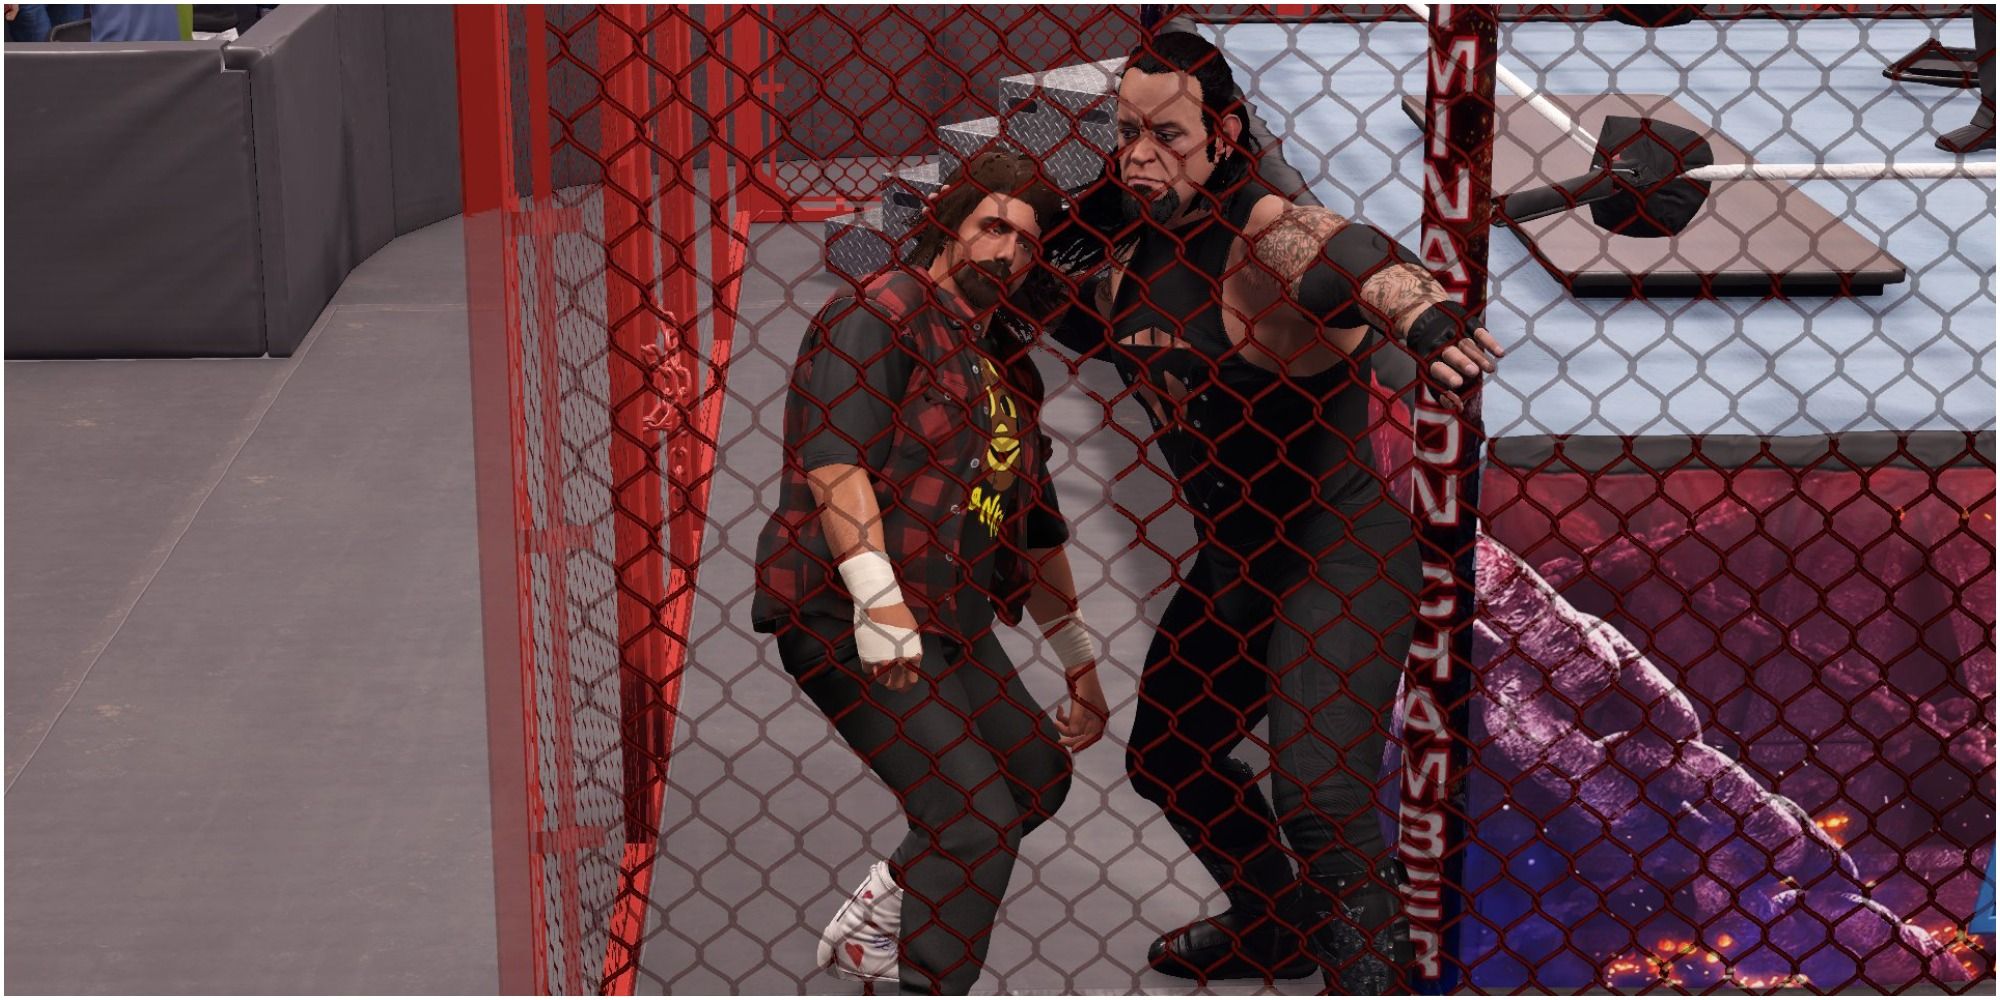  Undertaker smashing Foleys head into teh cage